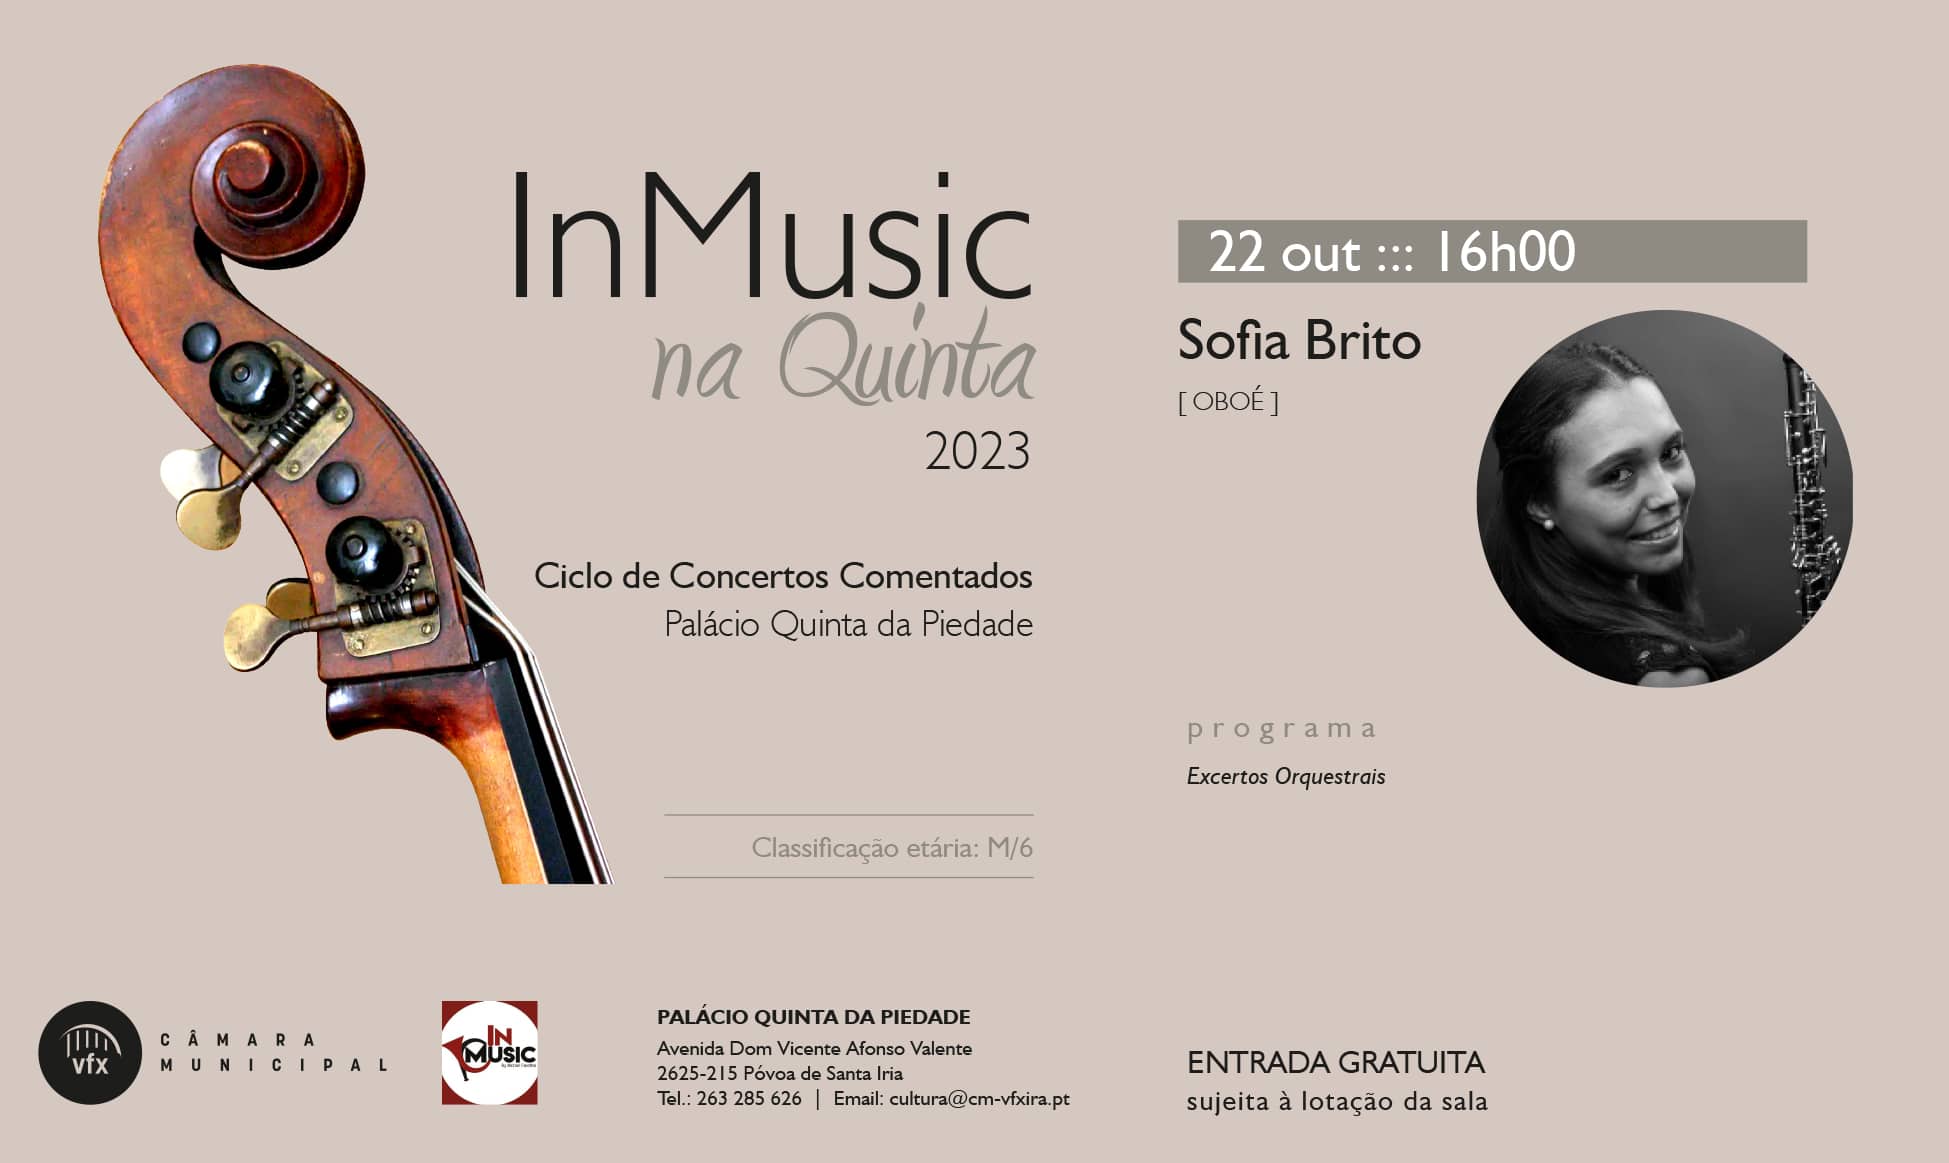 InMusic na Quinta - Sofia Brito no oboé 